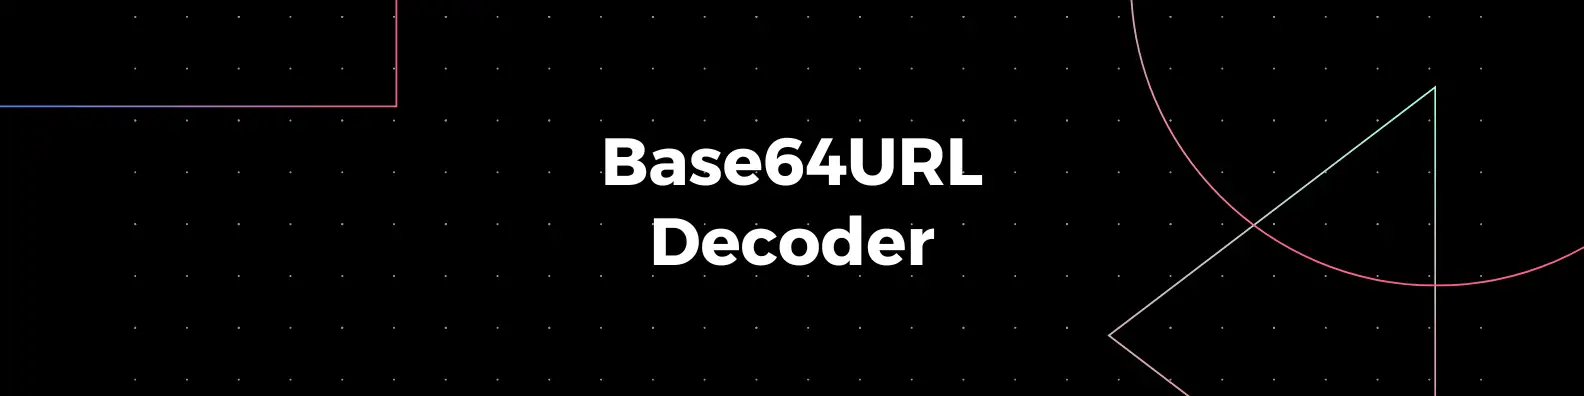 Online Base64URL Decoder: Convert Base64URL to Text or File